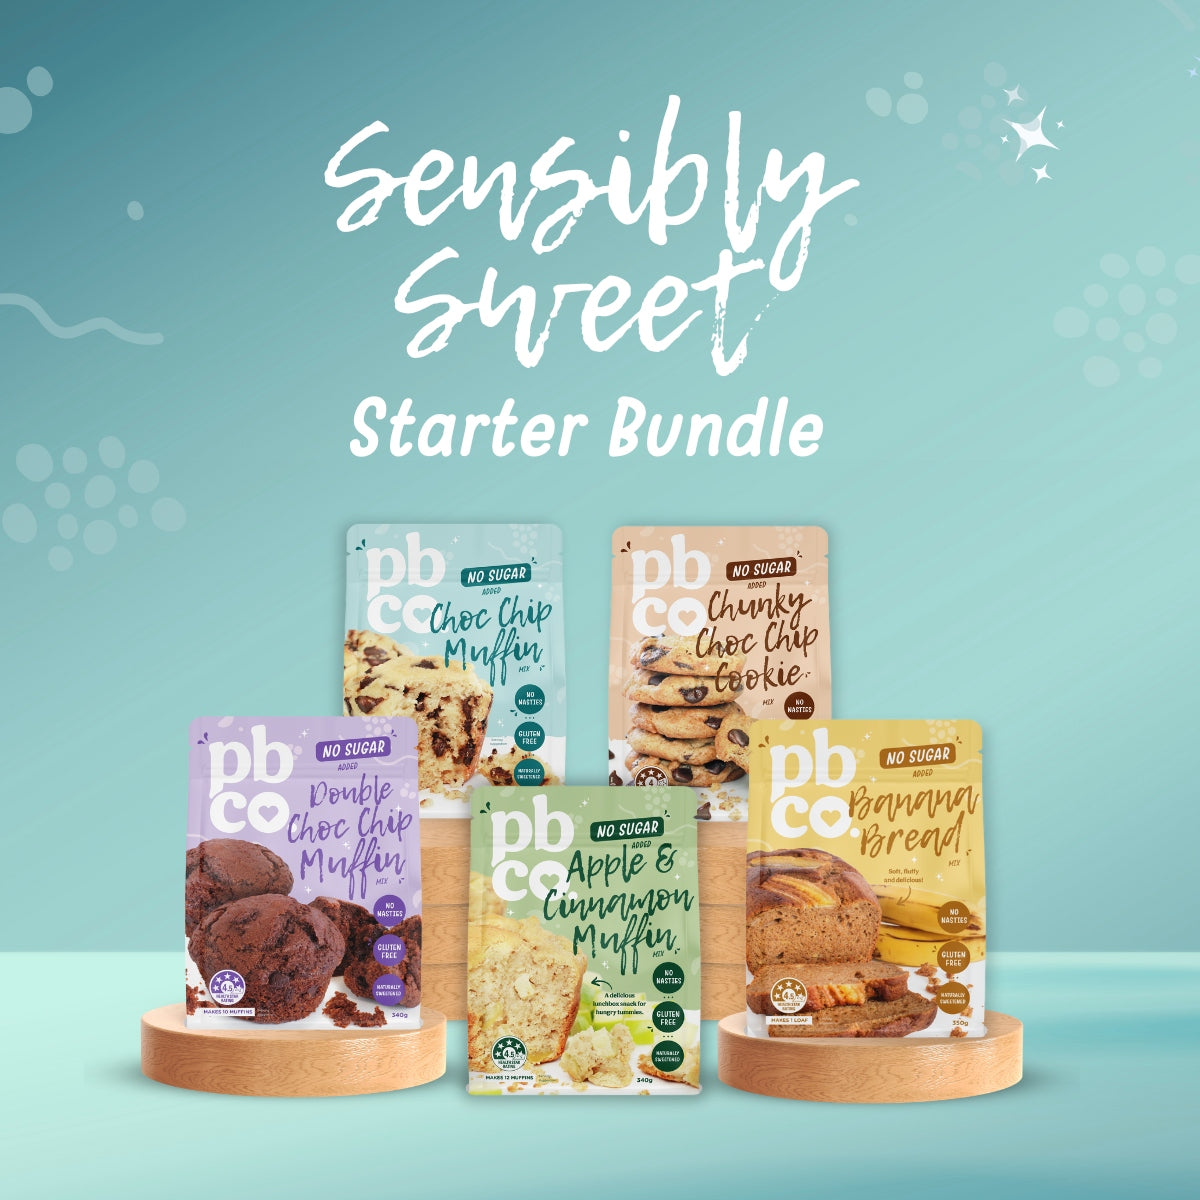 Sensibly Sweet Starter Bundle - Low carb & sugar free  - Just $53.77! Shop now at PBCo.